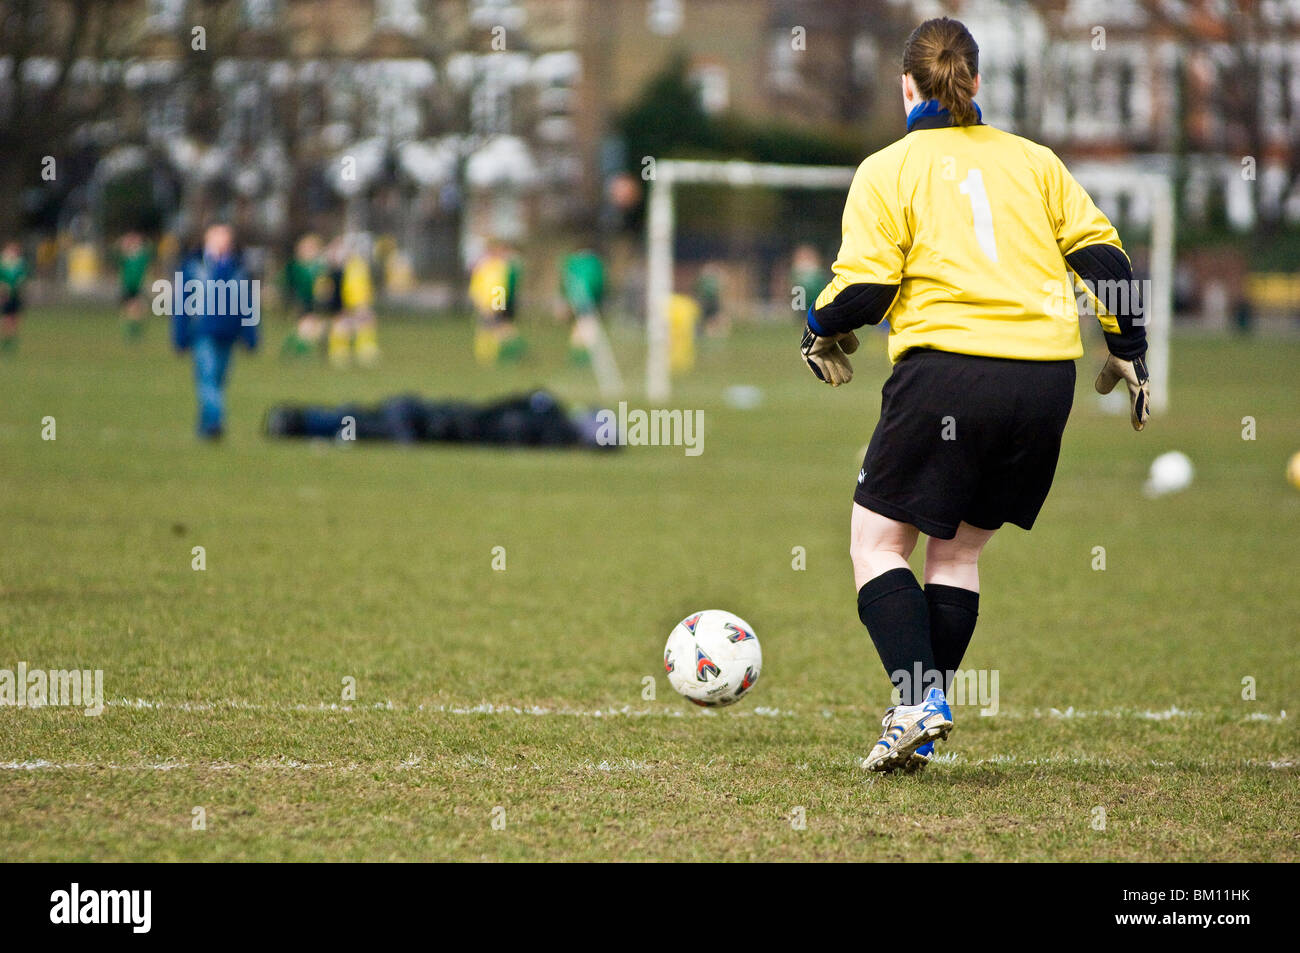 Women's Football, Clapham Common, South London, Stock Photo